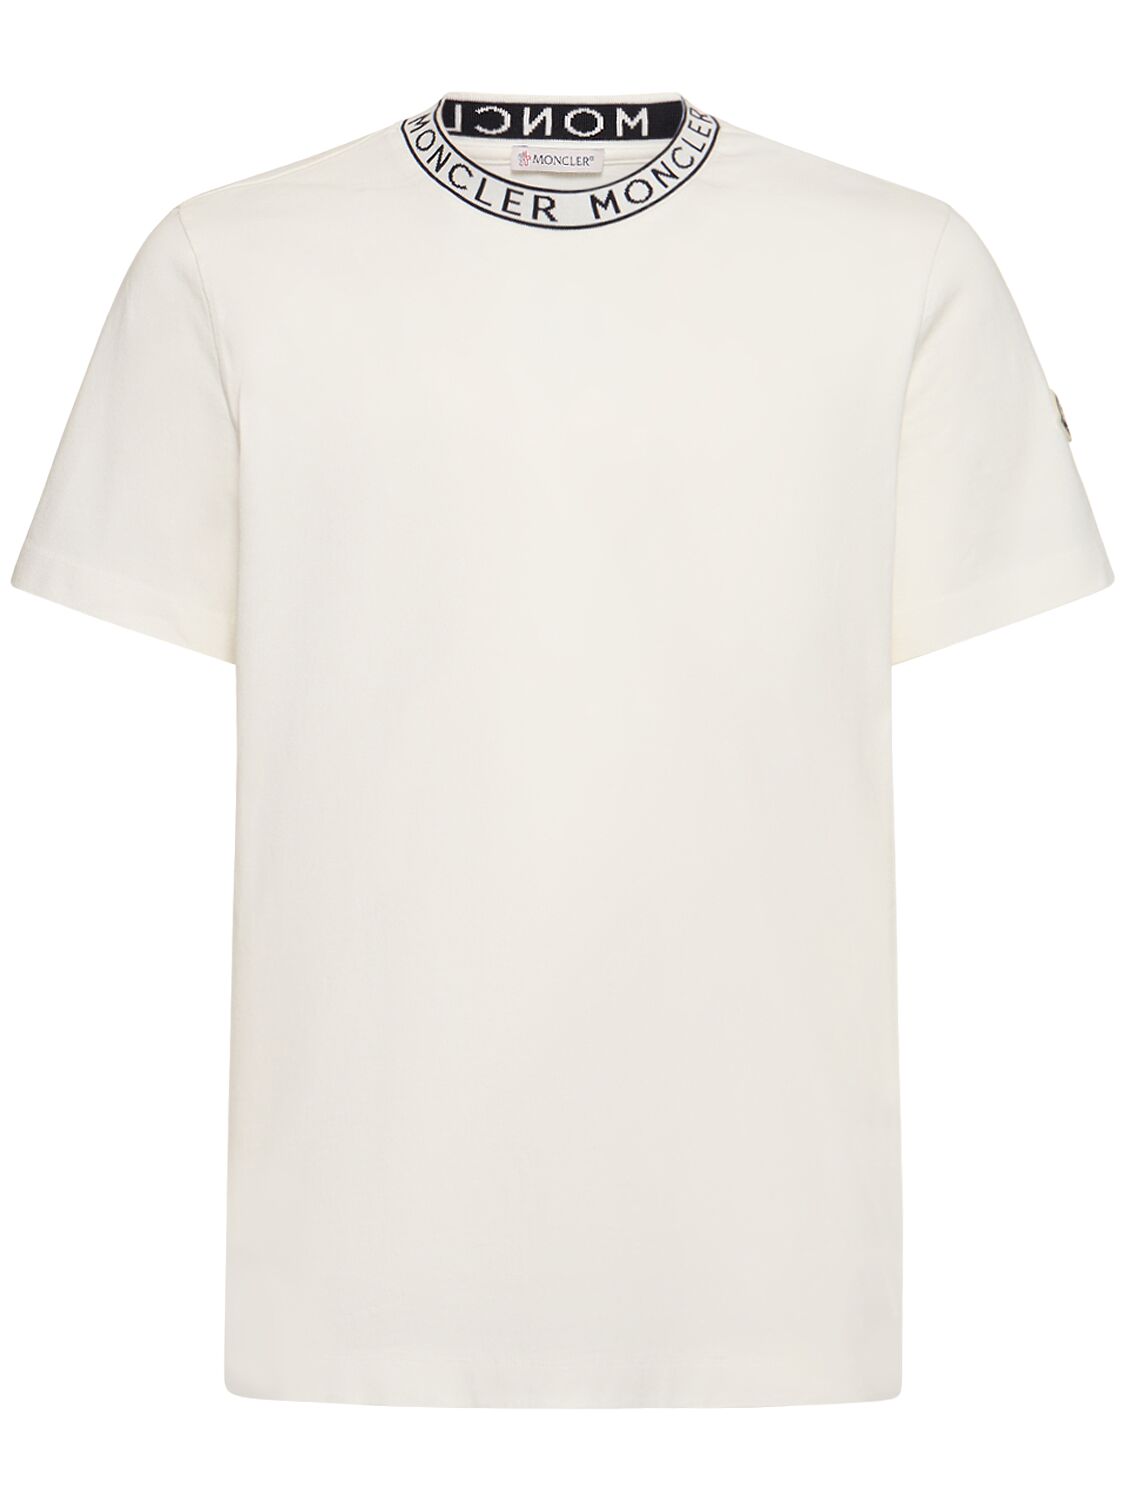 Moncler Logo Cotton Jersey T-shirt In White